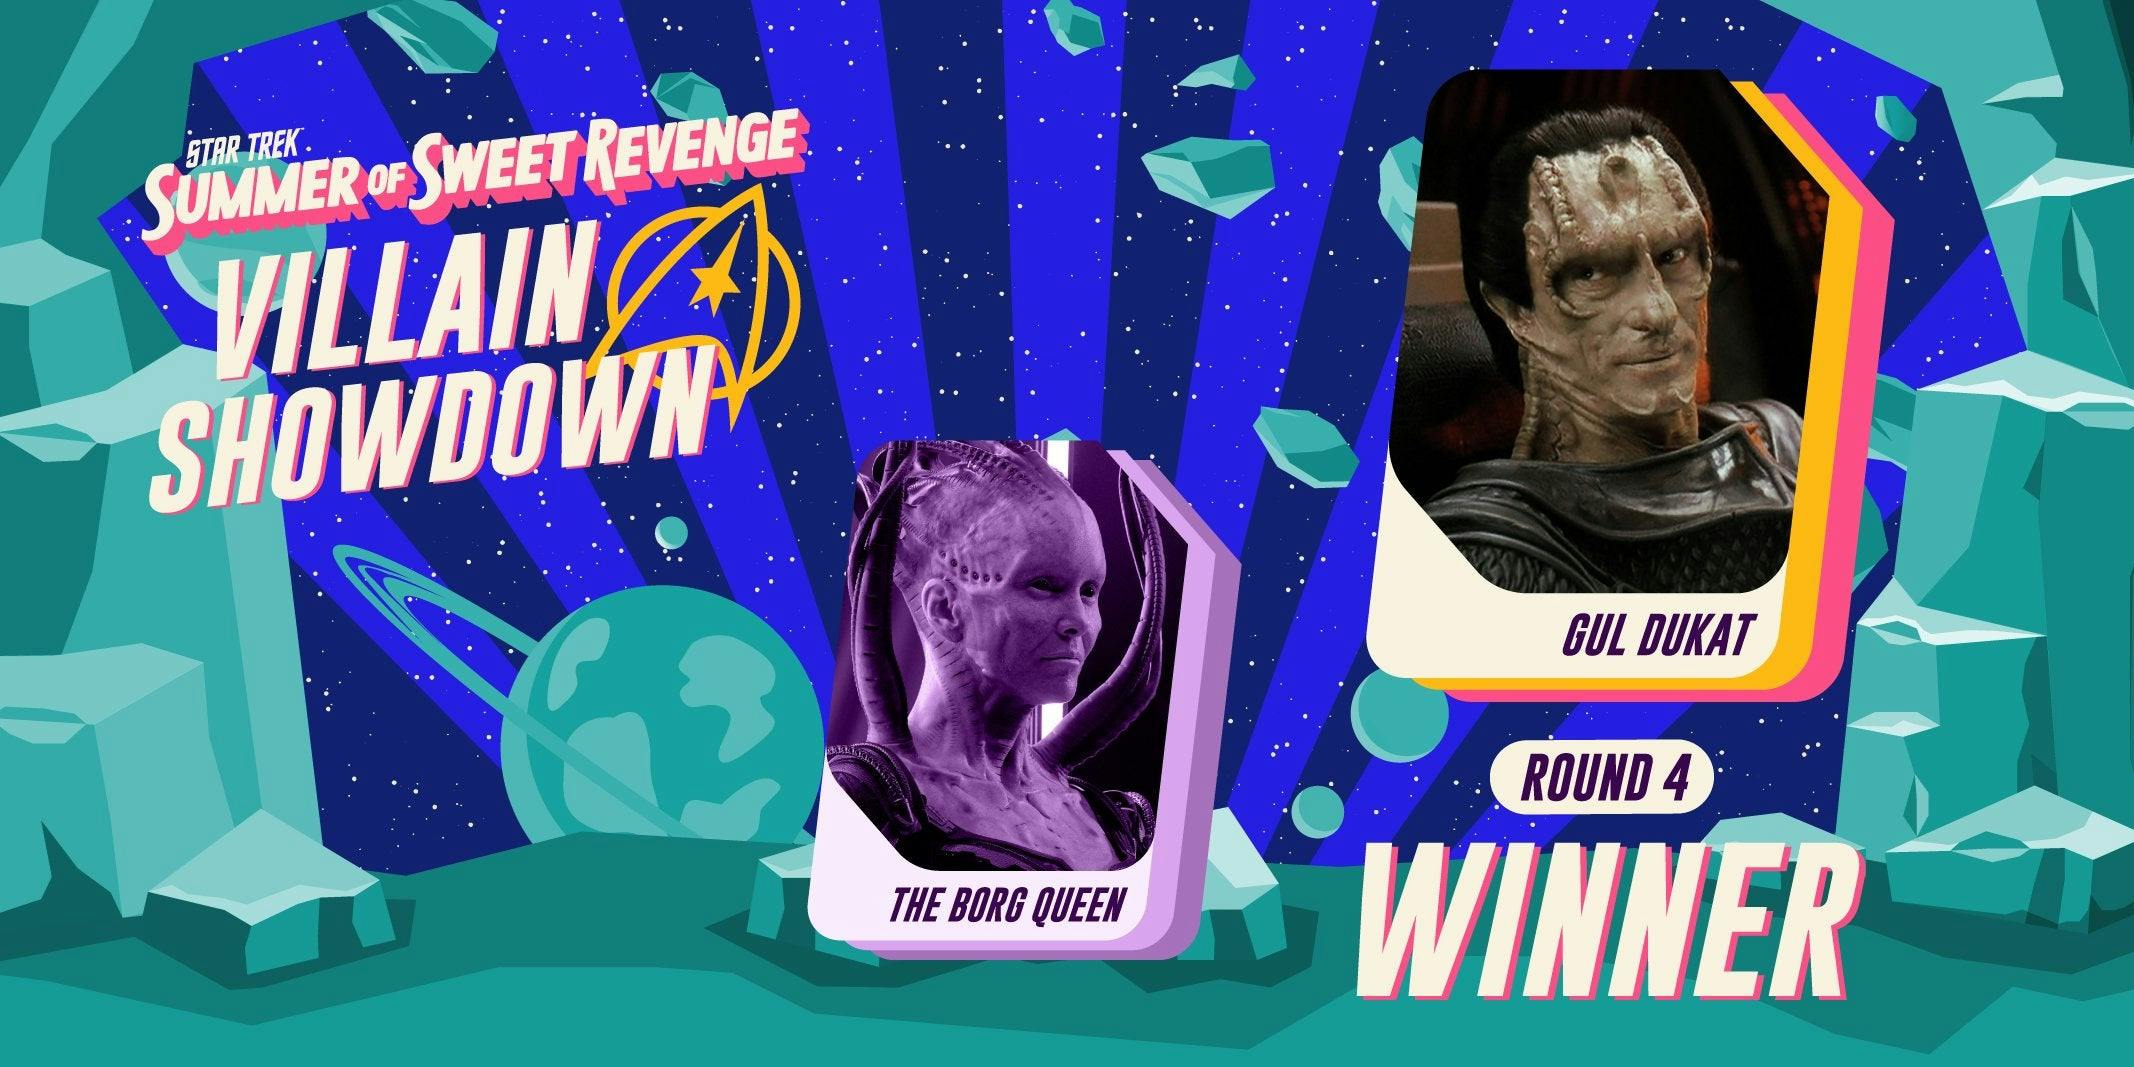 Gul Dukat defeats the Borg Queen in Round 4 of the Villain Showdown